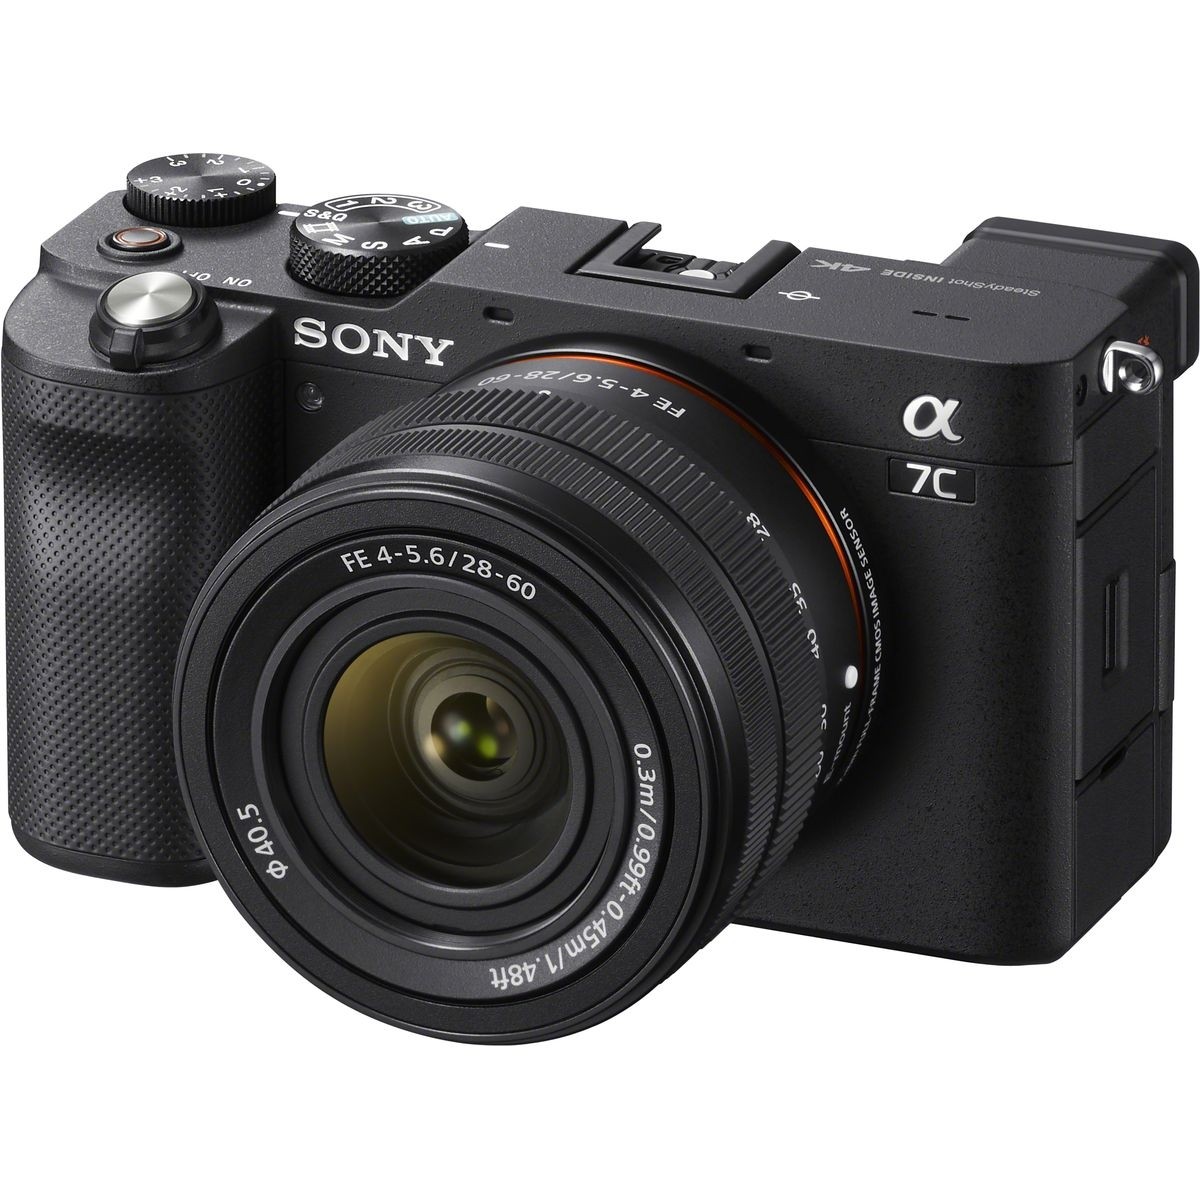 Sony A7C Black + SEL 28-60mm F4-5.6 